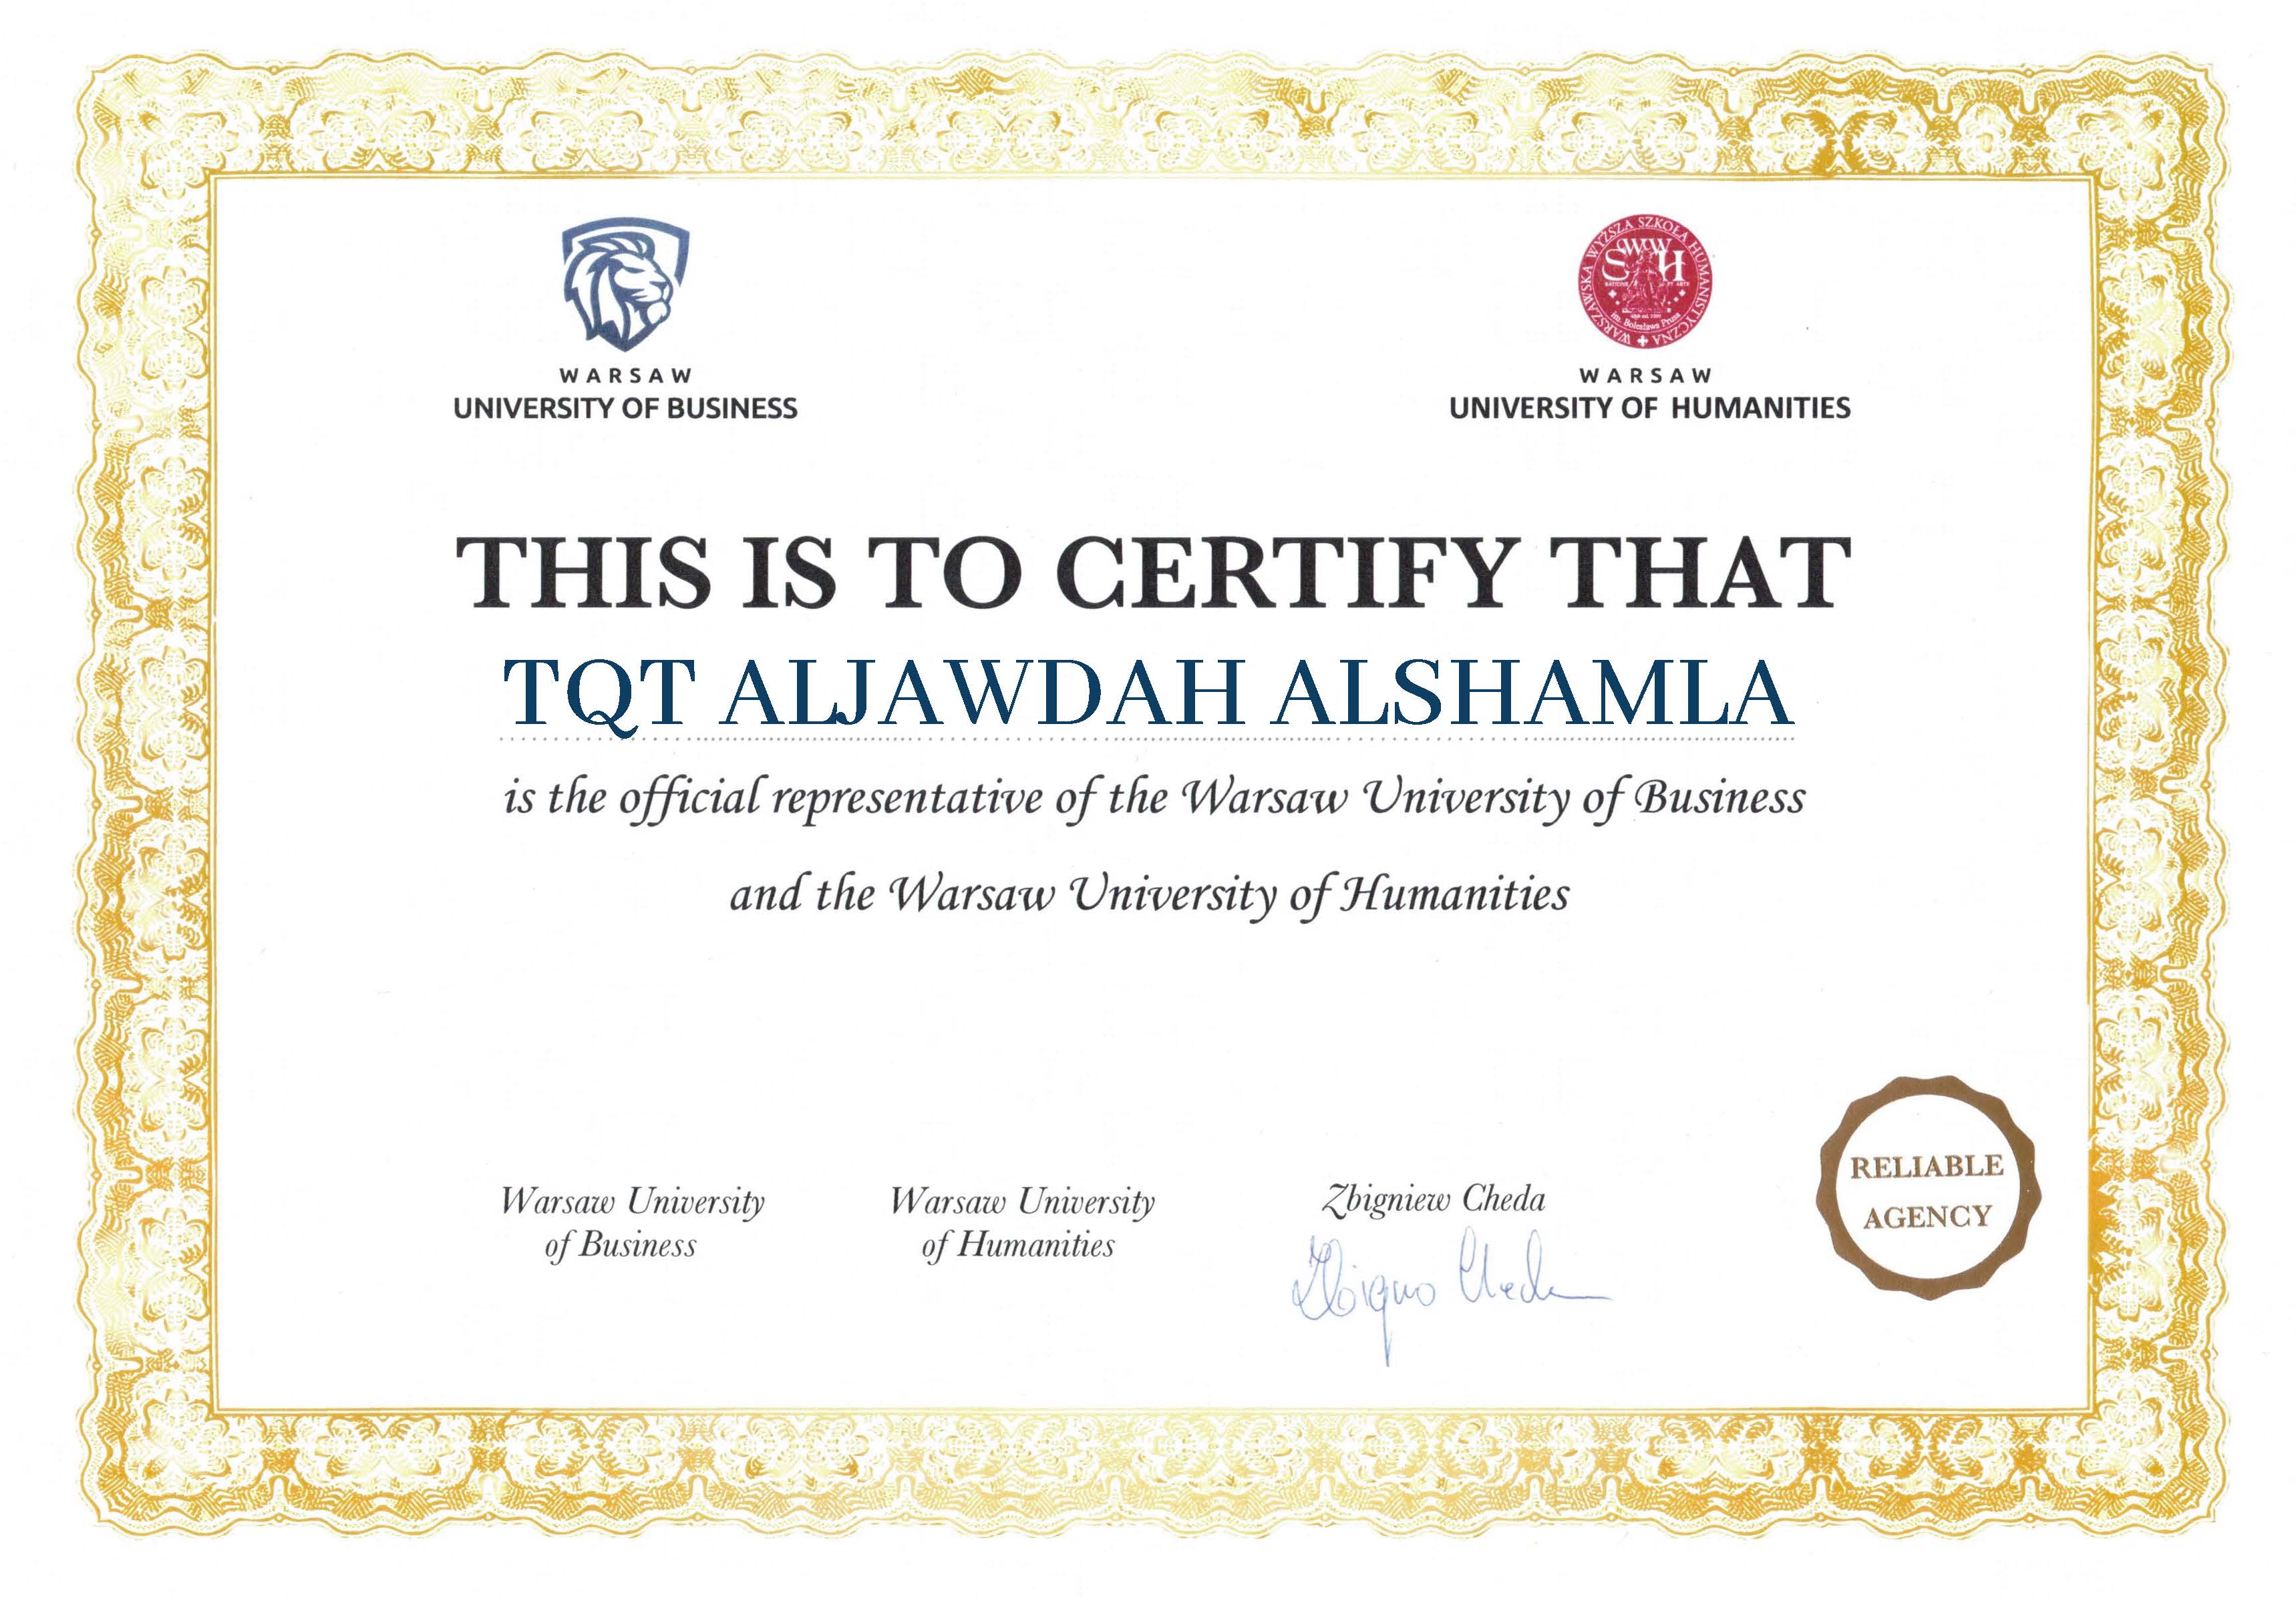 tqt-aljawdah-alshamla-certificate.jpg